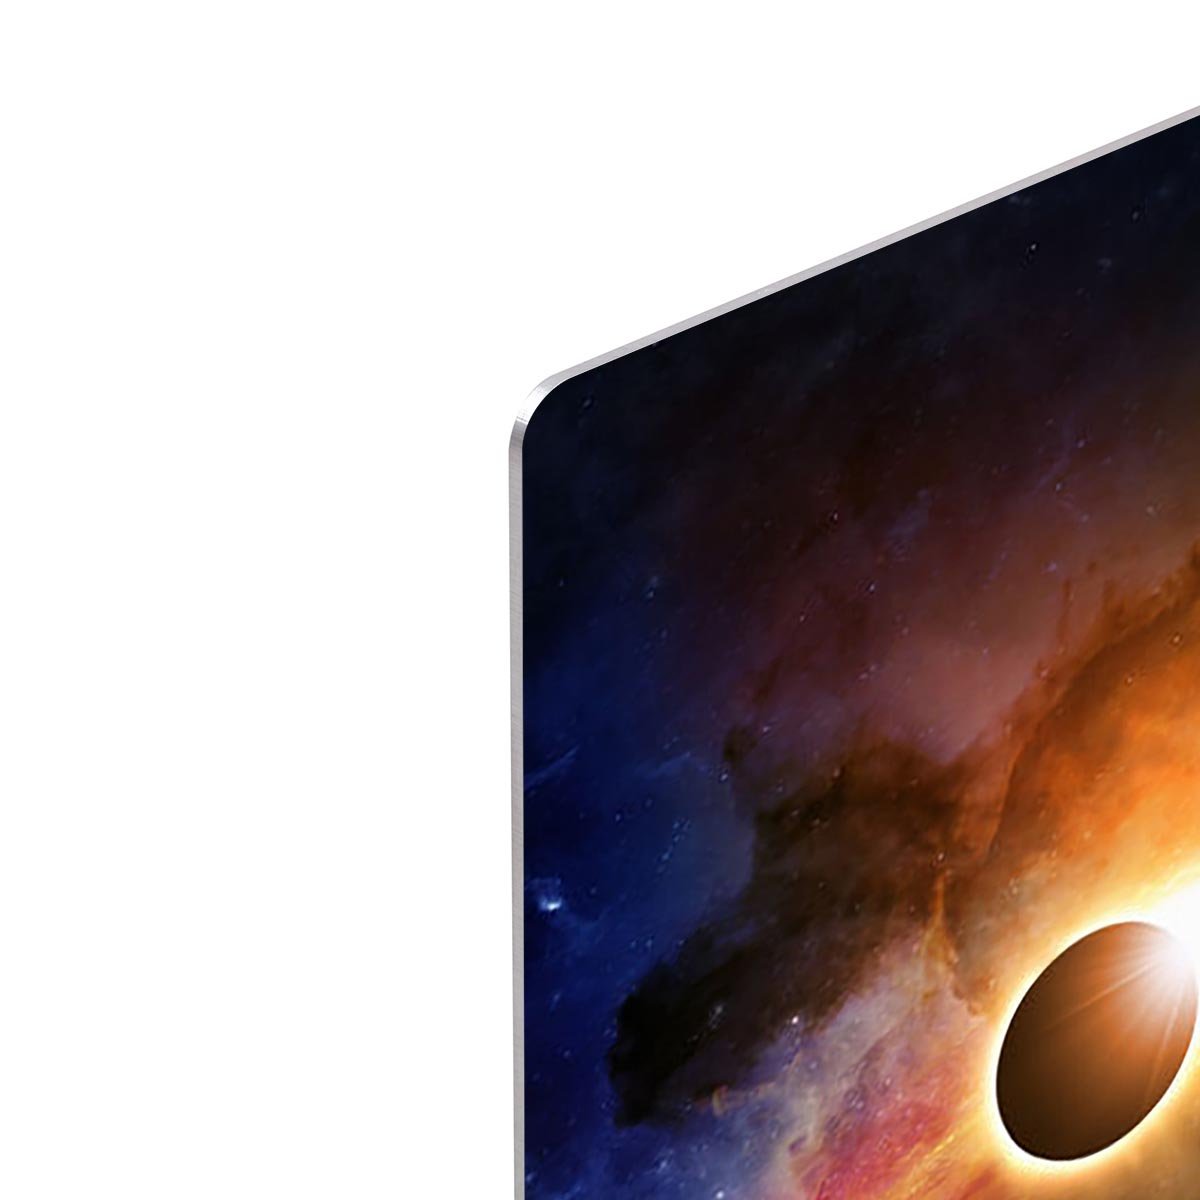 Solar Eclipse Nebula and Stars HD Metal Print